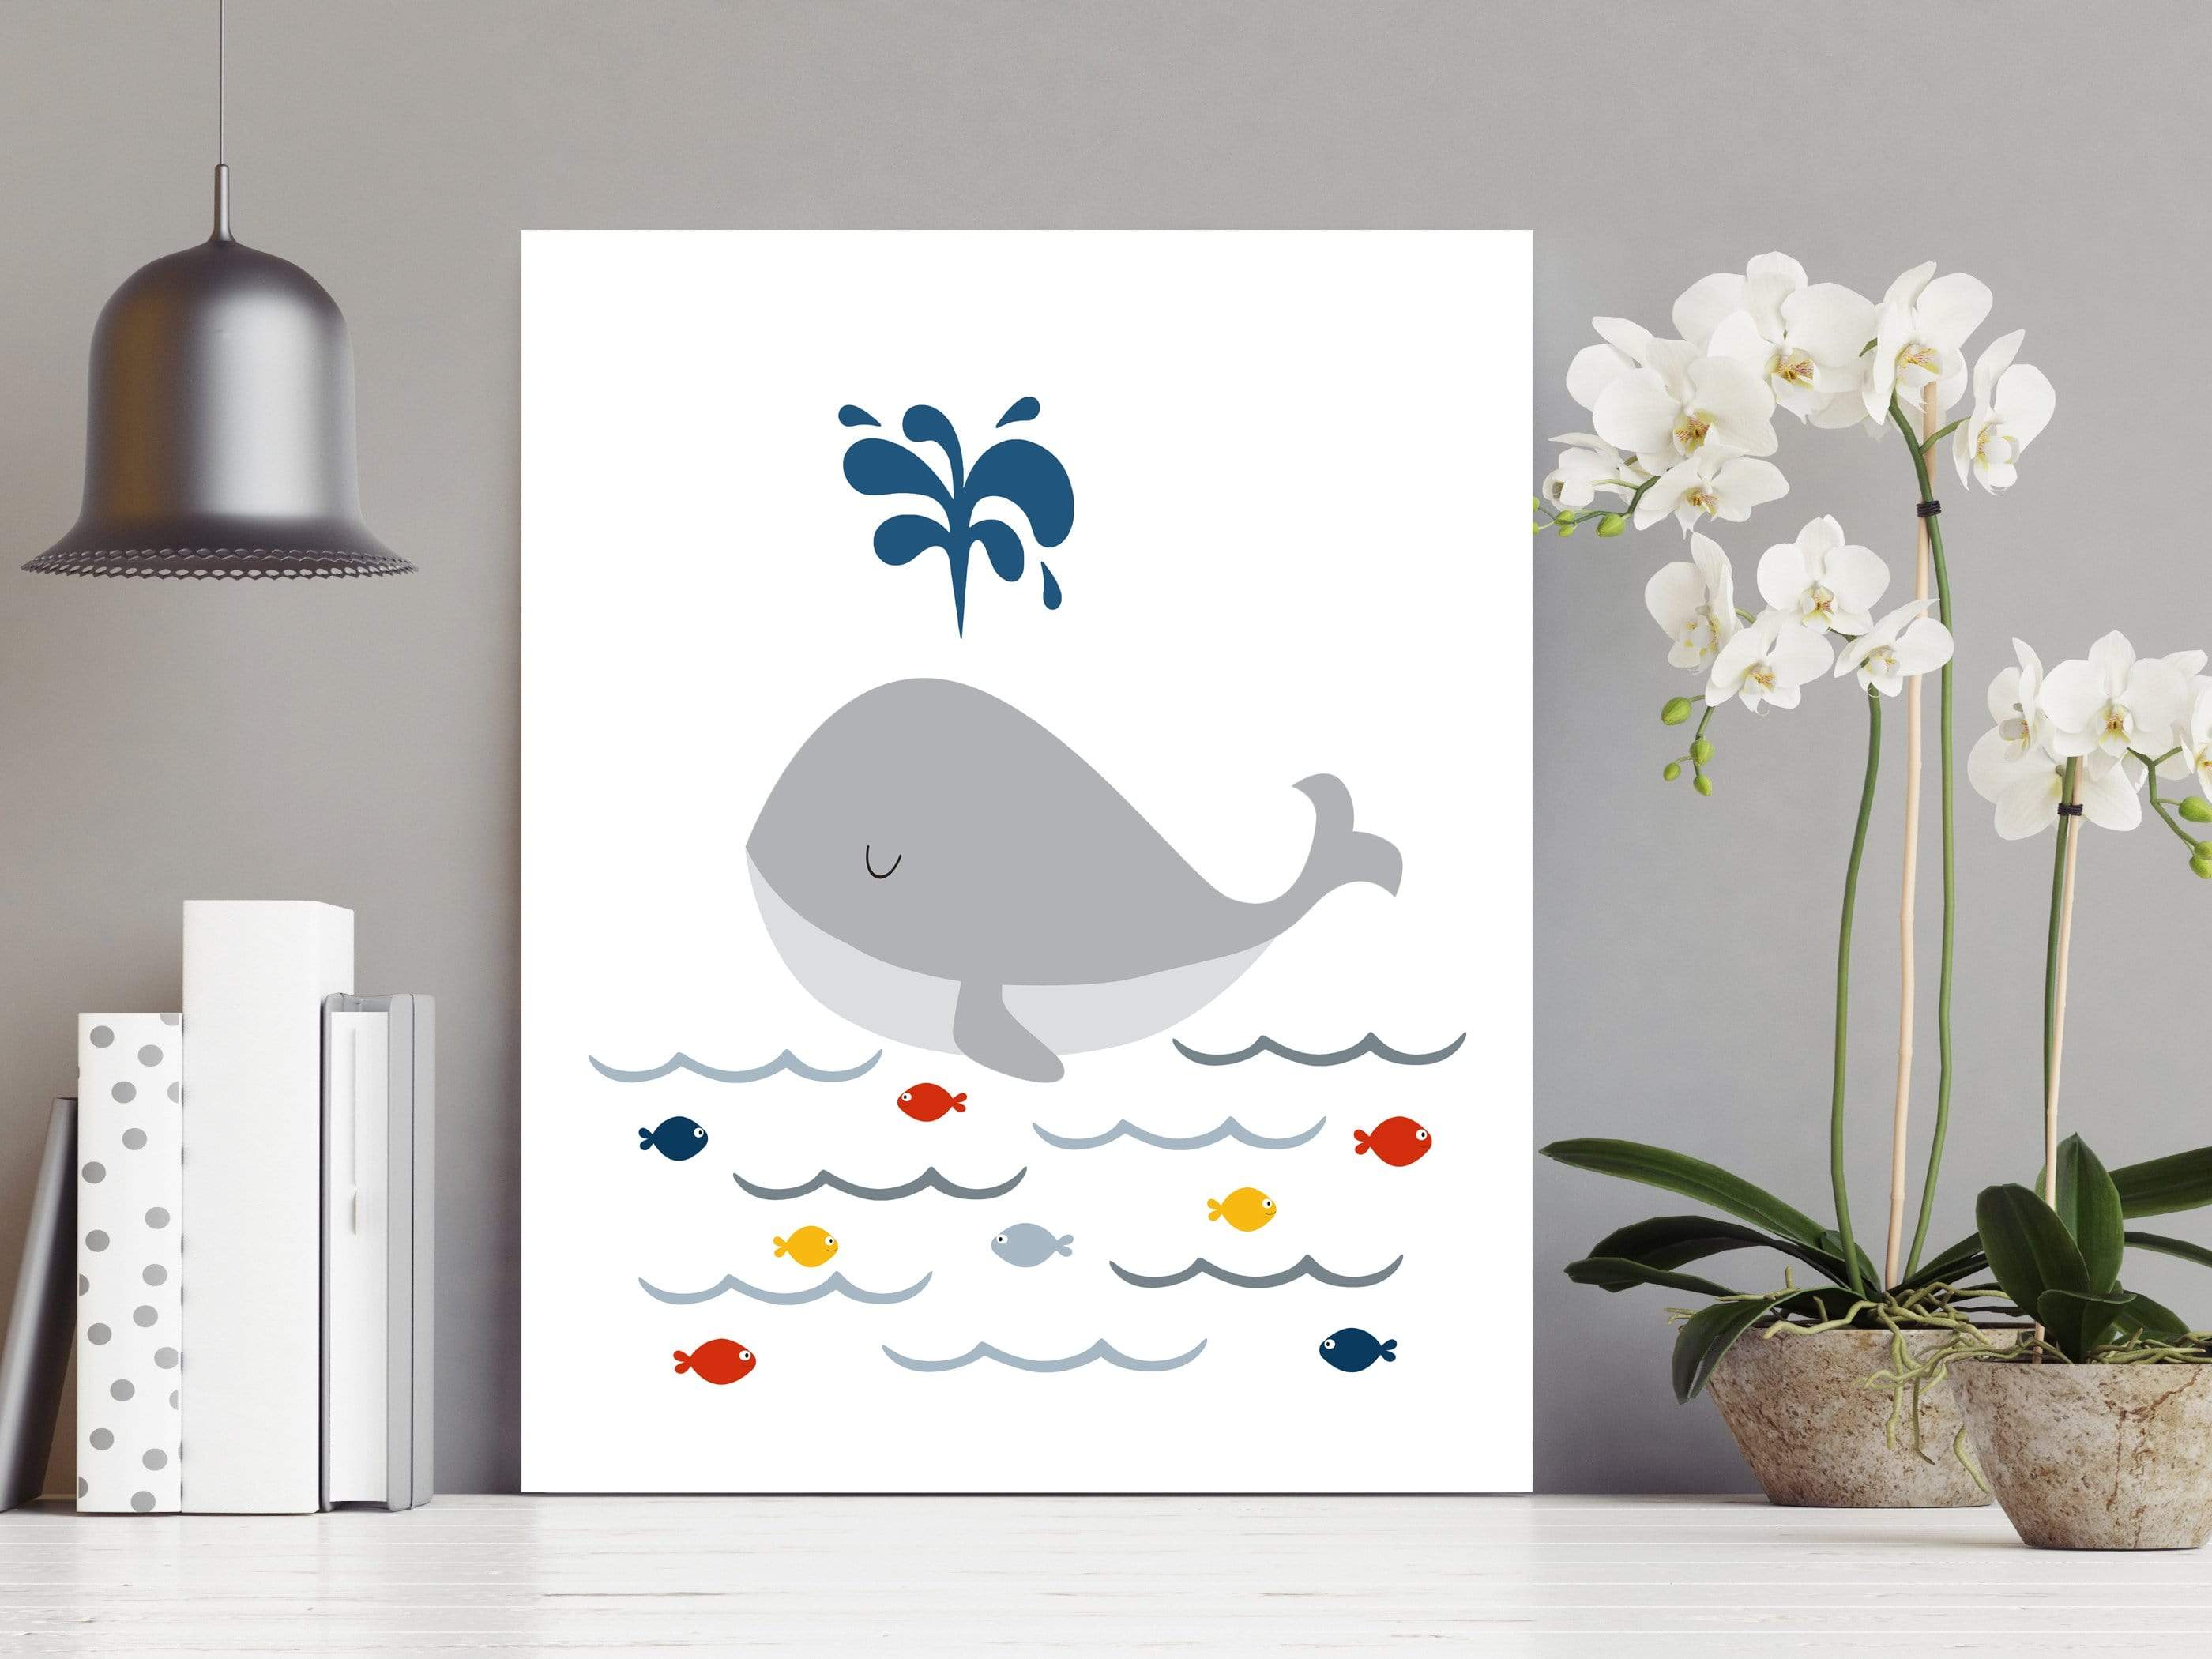 8x10 Whale nursery prints - Whale nursery wall art - Whale printable wall art - Ocean theme nursery - Whale wall decor - Whale baby gift - H1976 nursery art print baby nursery bedroom decor